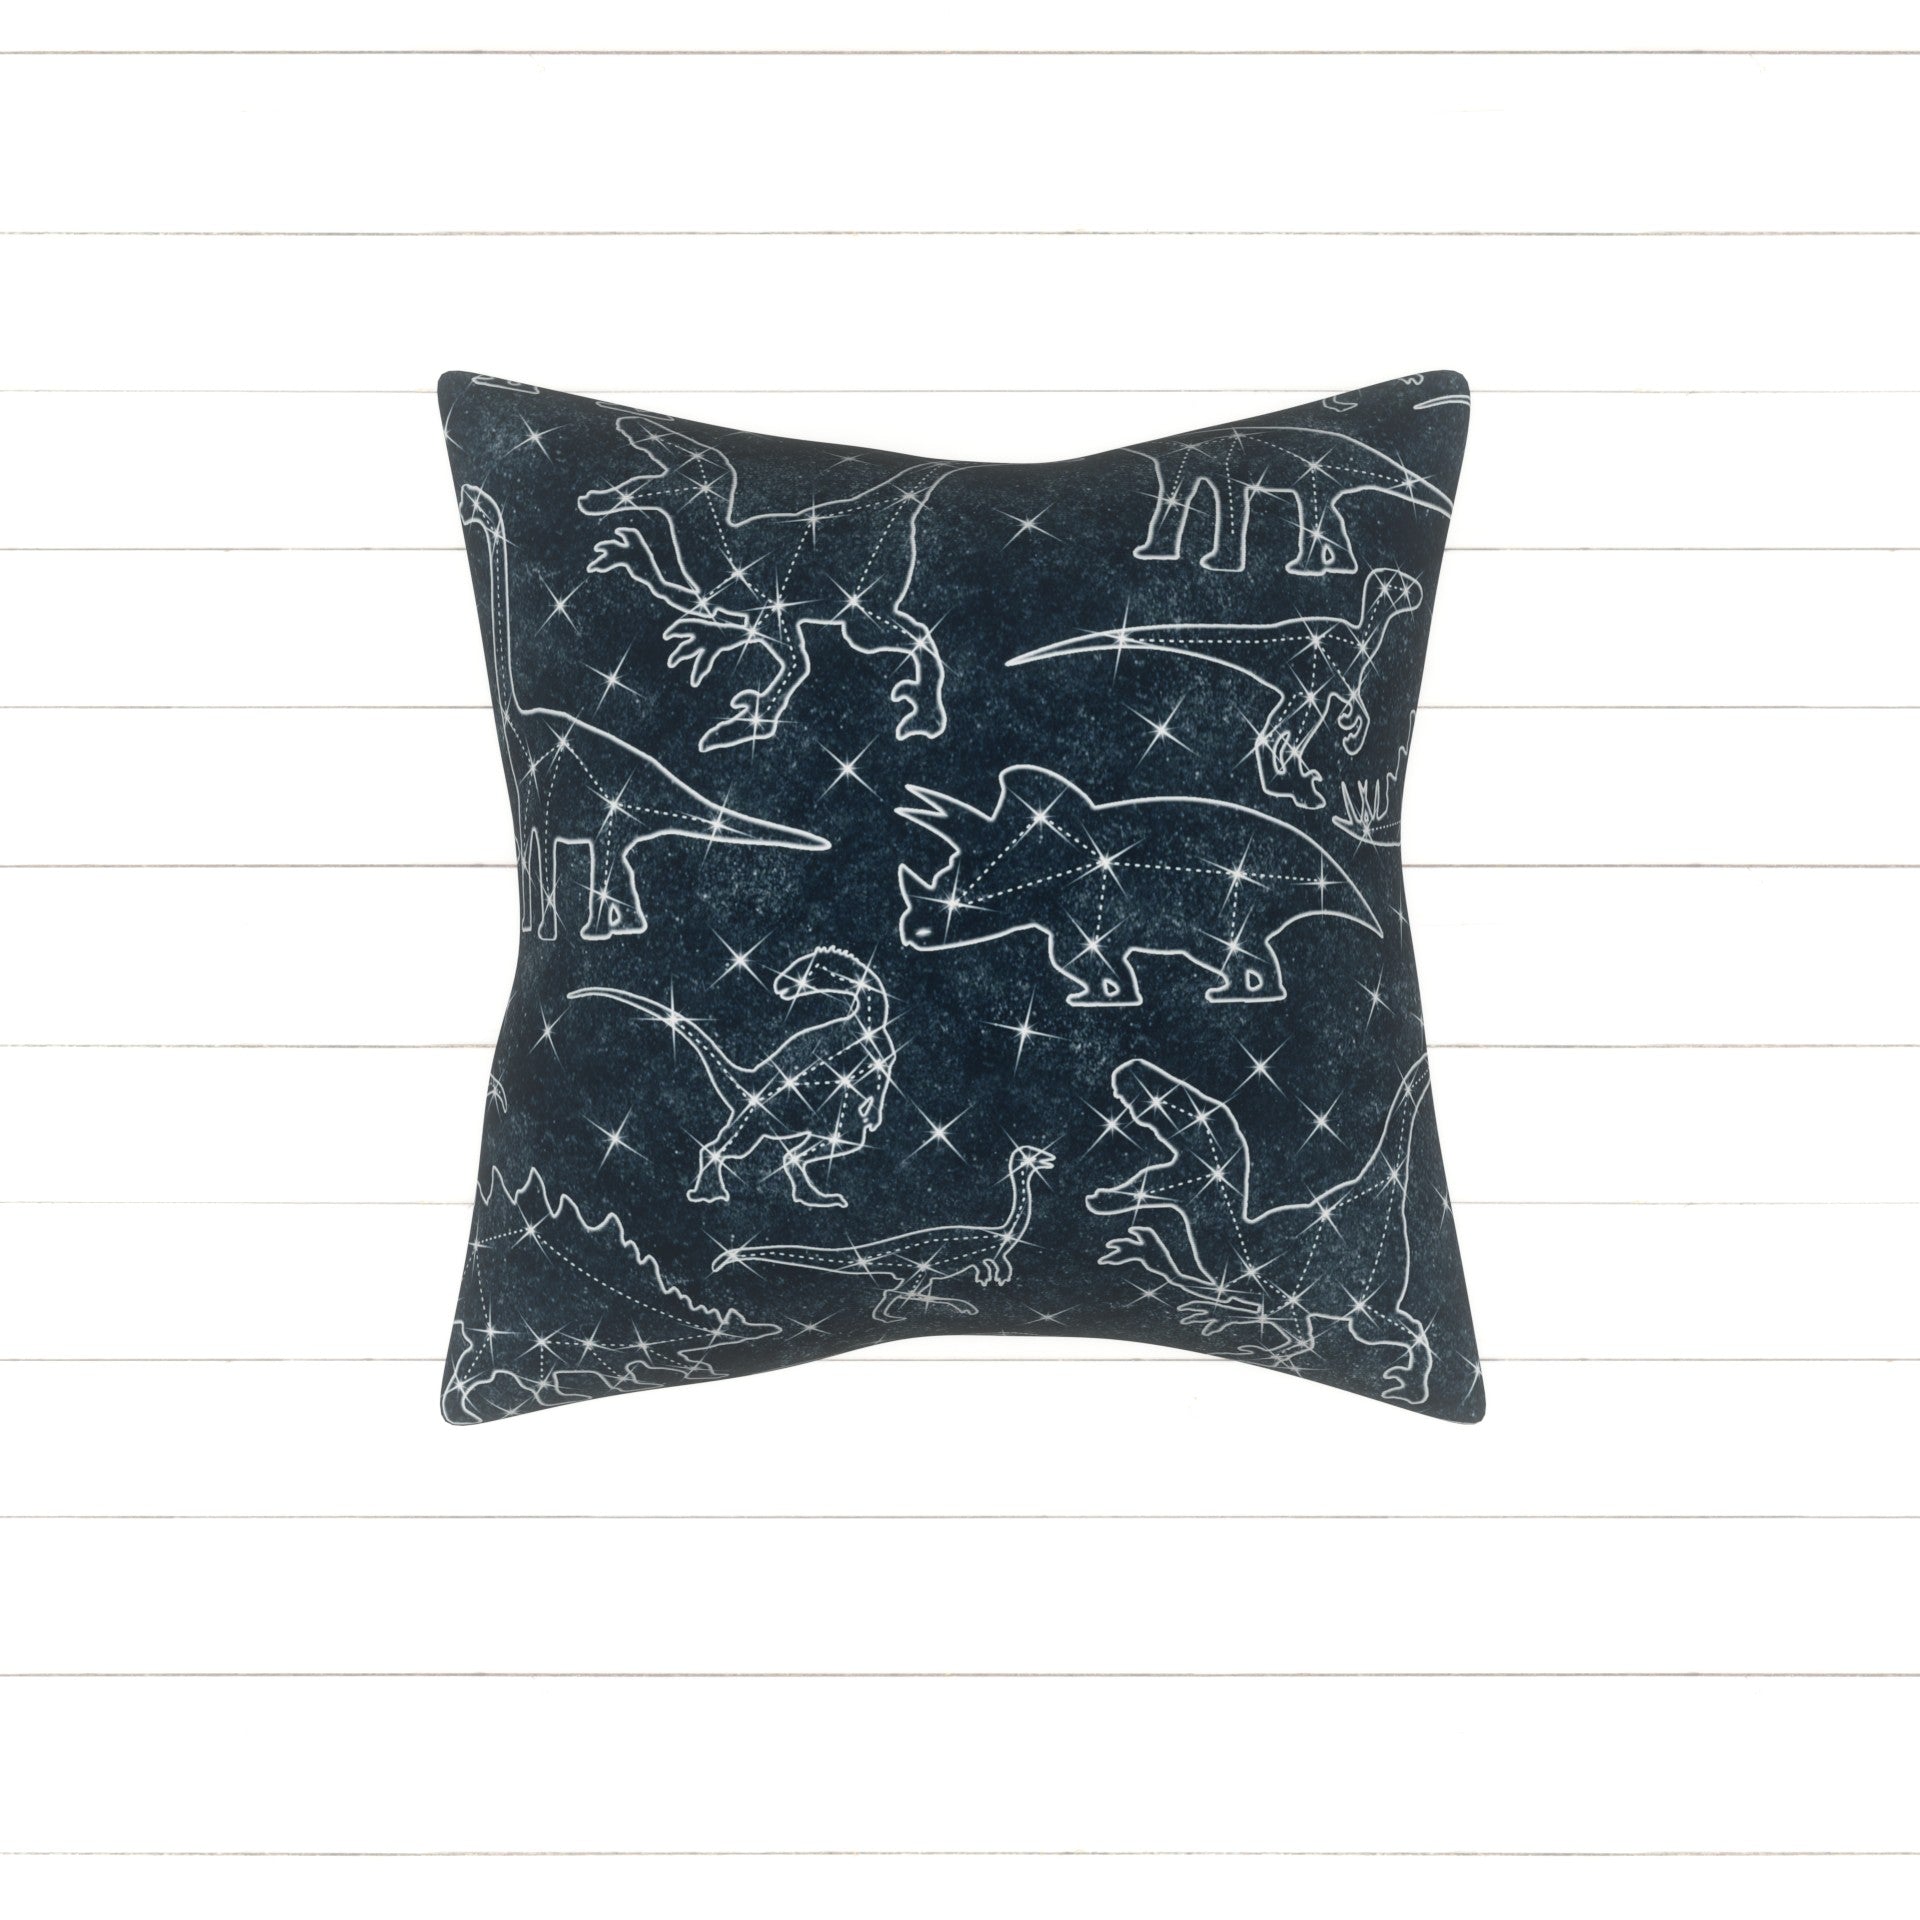 Dinosaur constellations on midnight blue Fabric, Raspberry Creek Fabrics